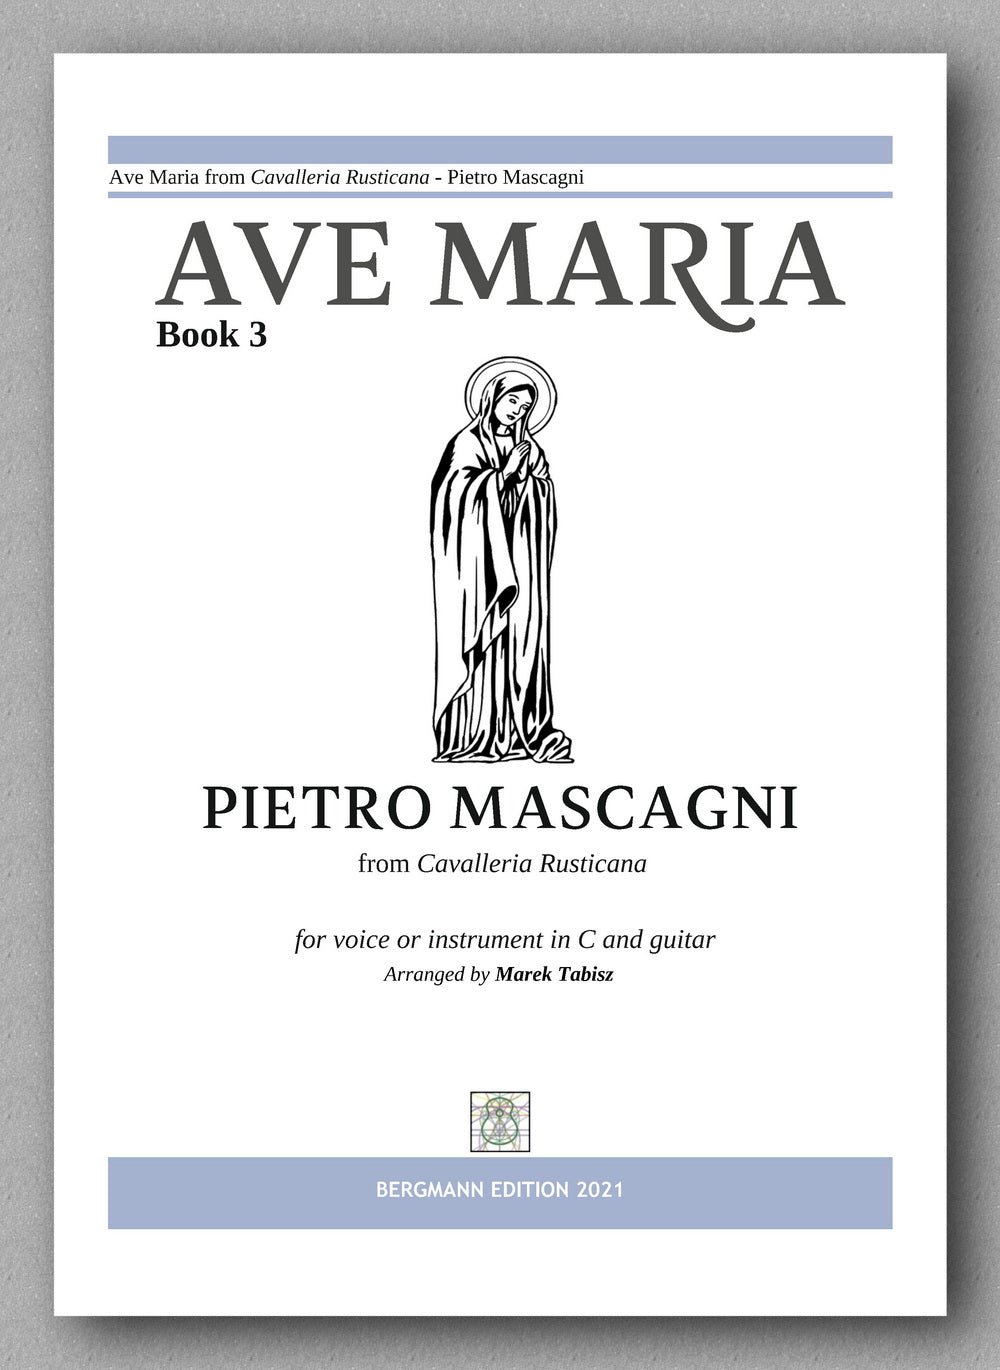 Mascagni-Tabisz, Ave Maria, Book 3 - cover